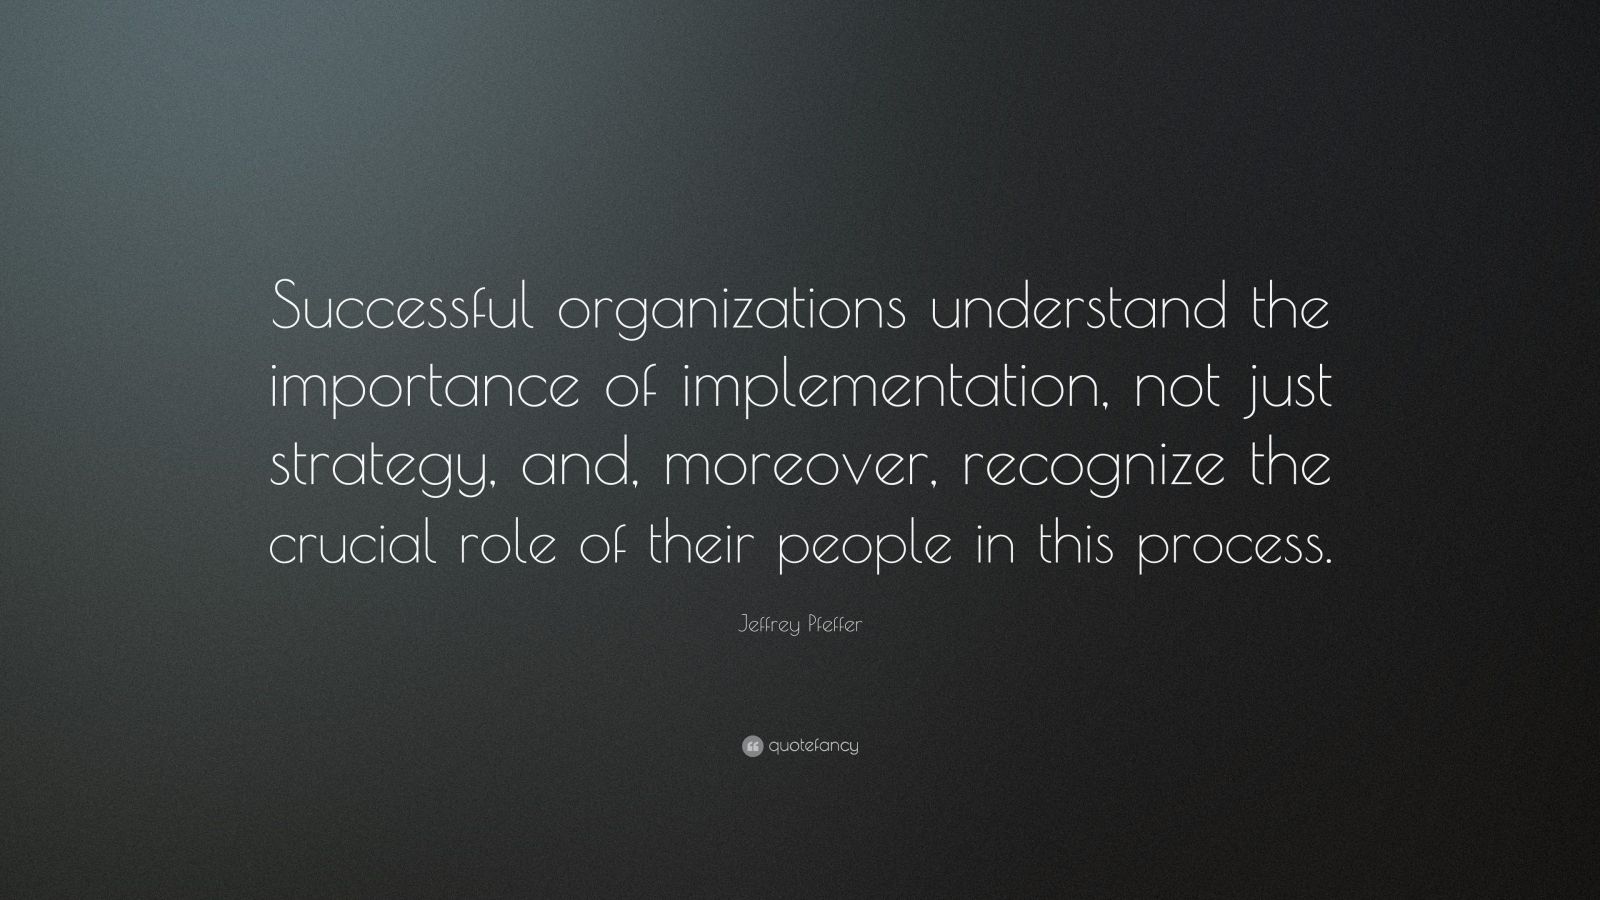 Jeffrey Pfeffer Quote “Successful organizations understand the